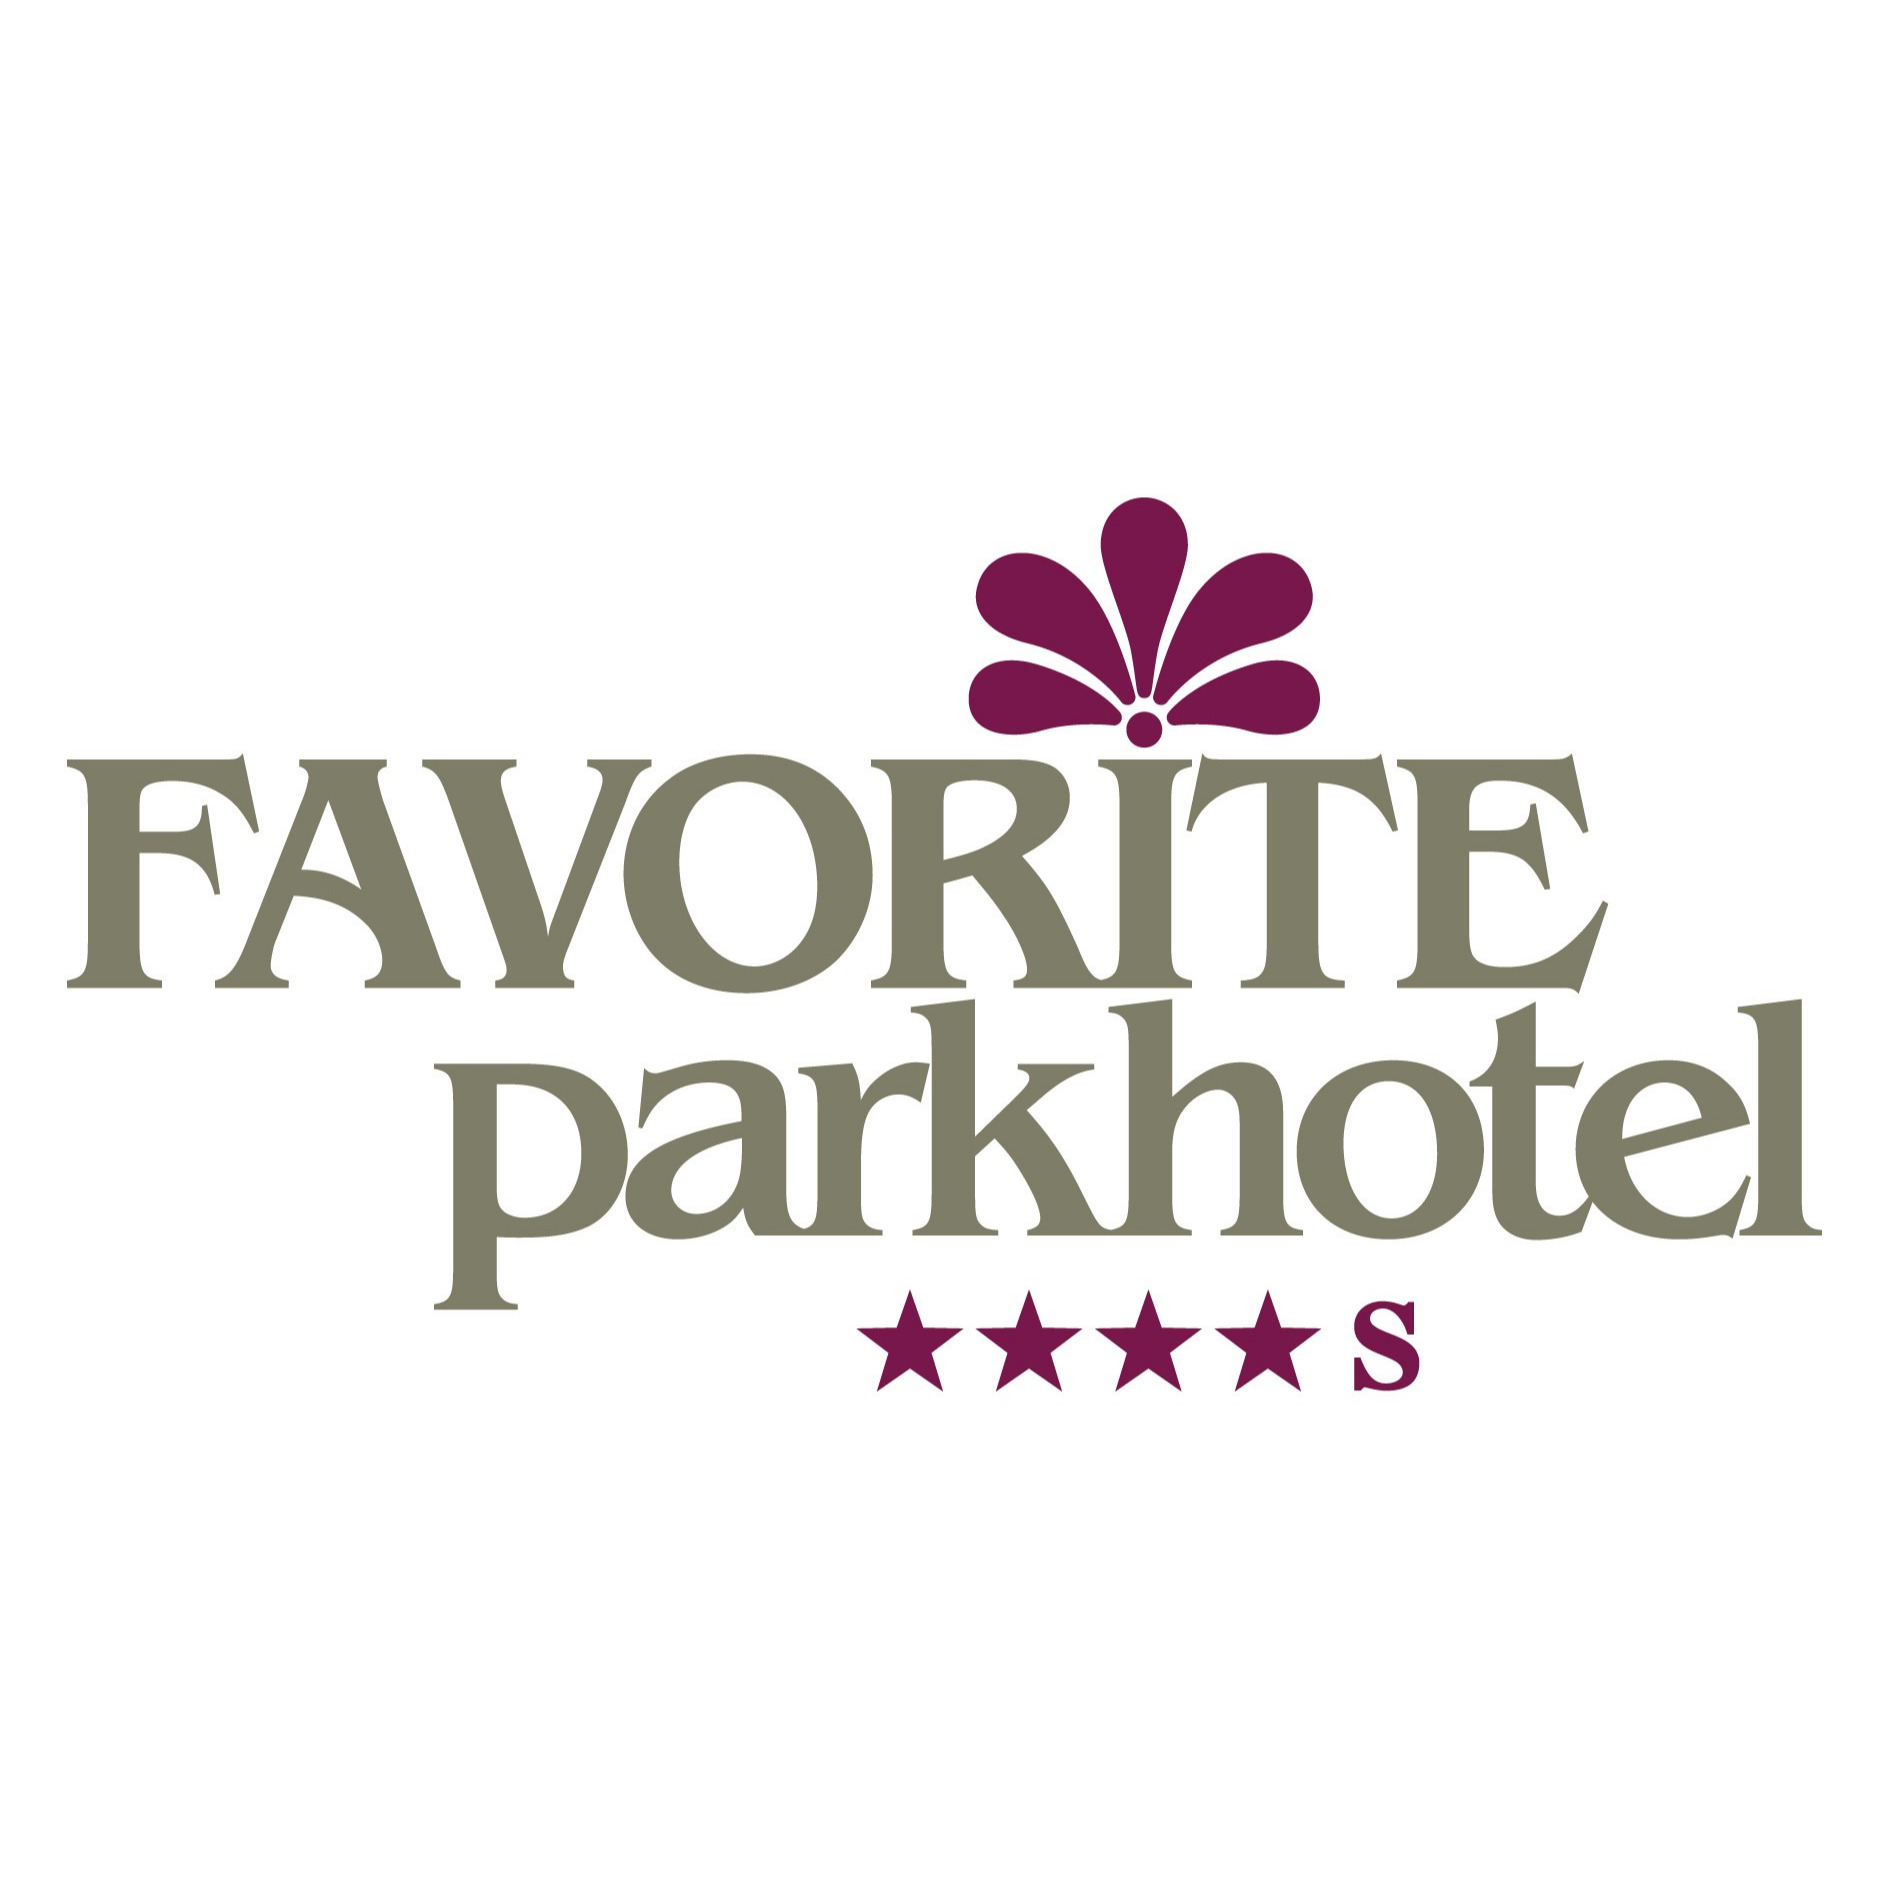 Logo Favorite Parkhotel